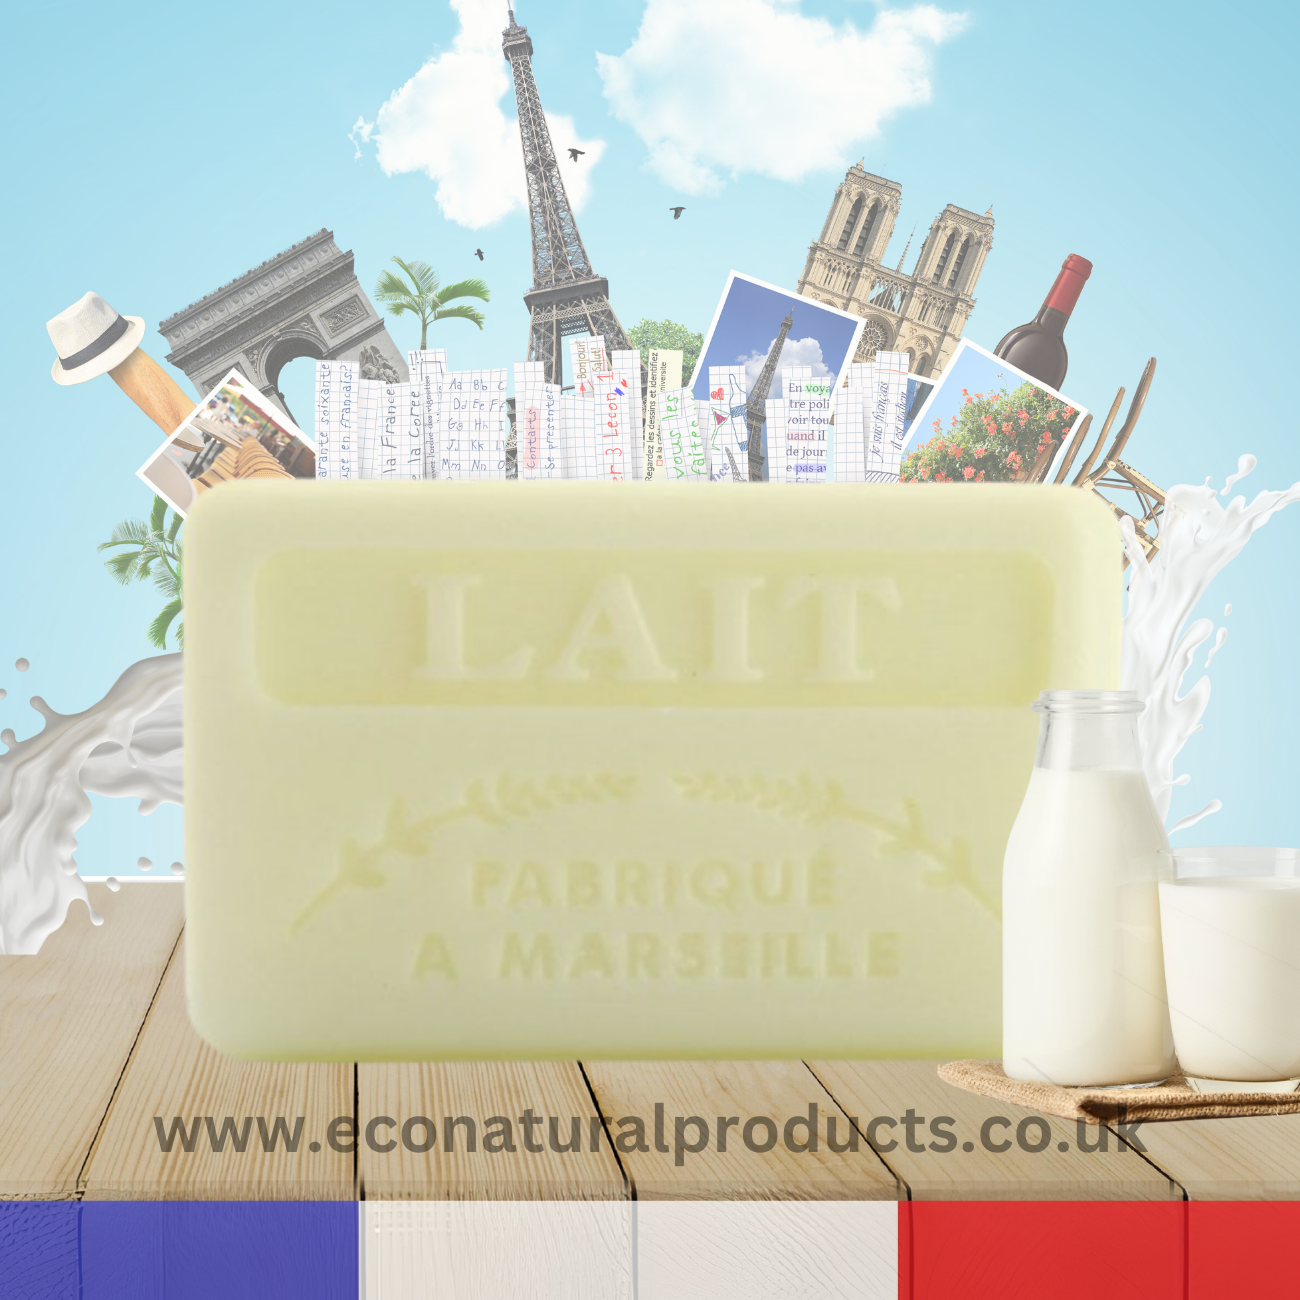 French Marseille Soap Lait (Milk) 125g